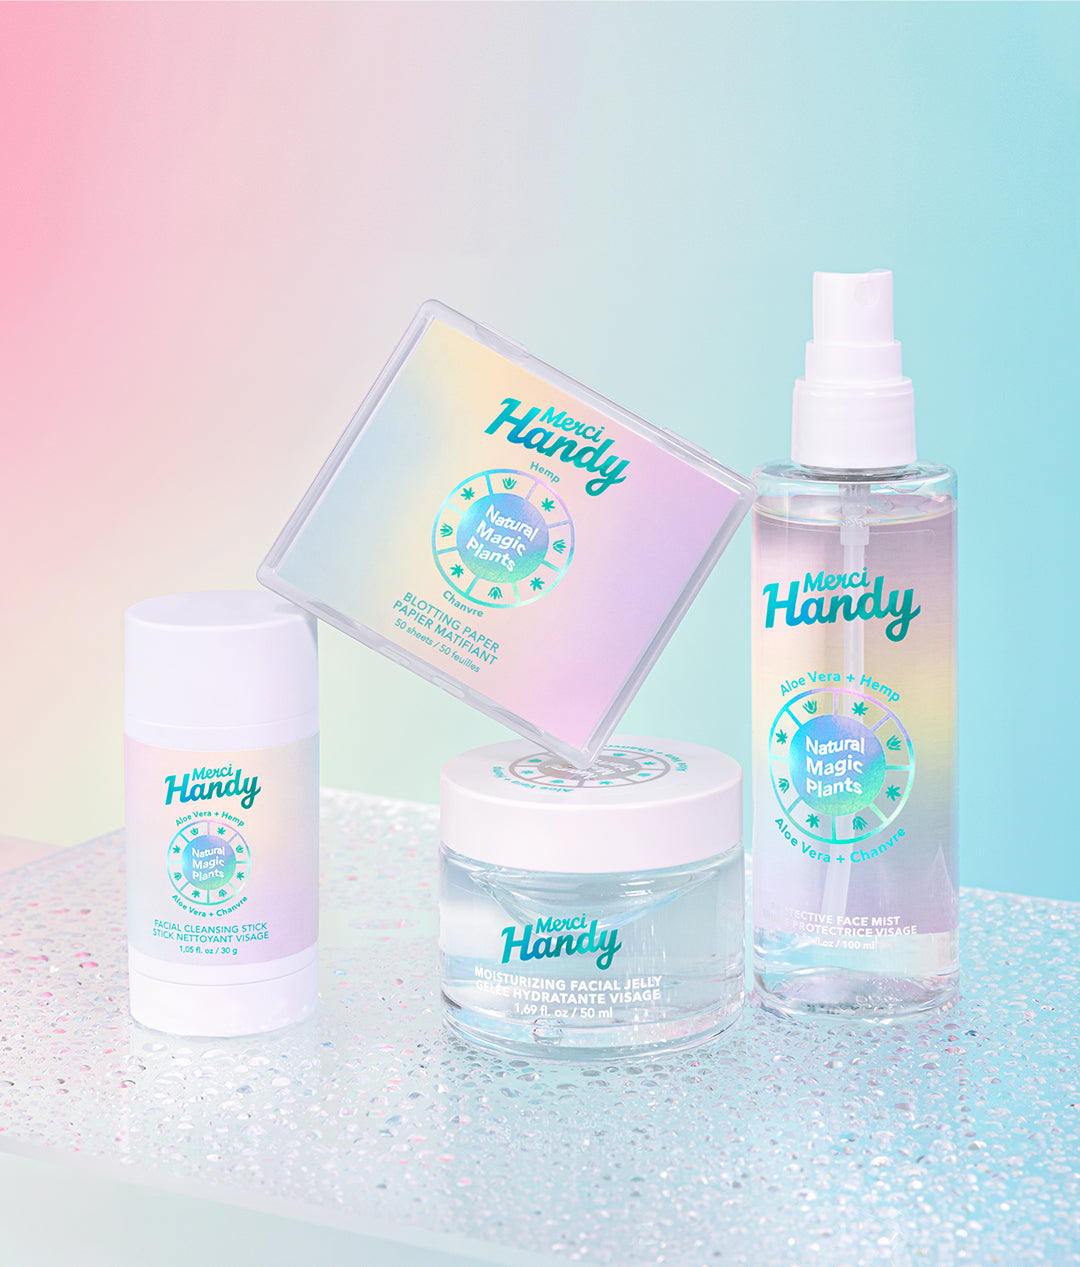 Merci Handy - Making every day cosmetics – Merci Handy US